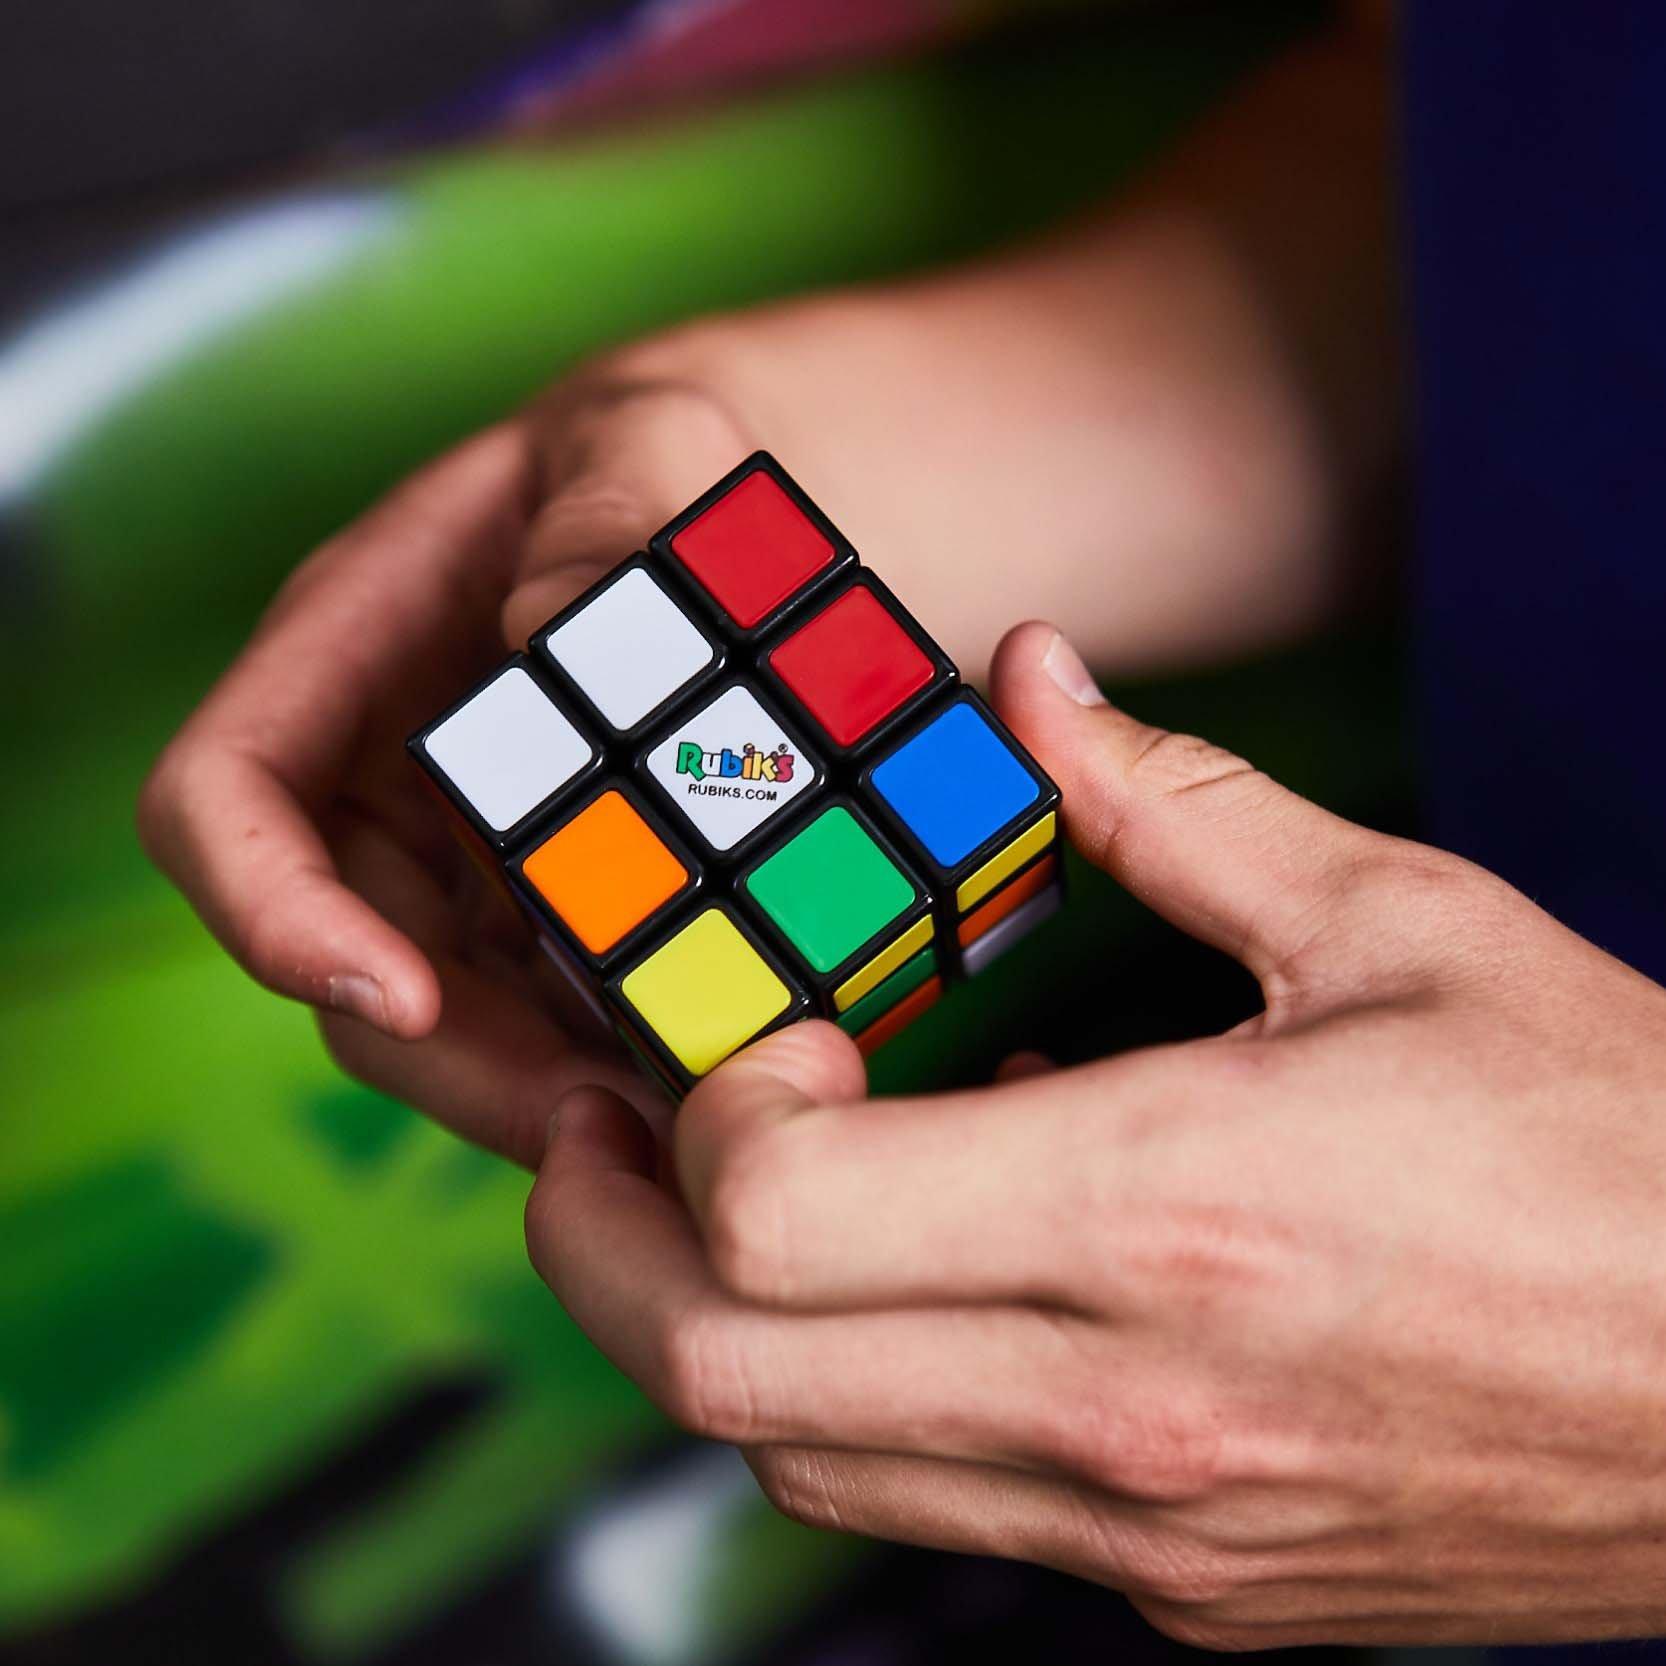 Original Gamer - (Adult Sizes) Rubik's Cube T-Shirt - Cool Cube Merch